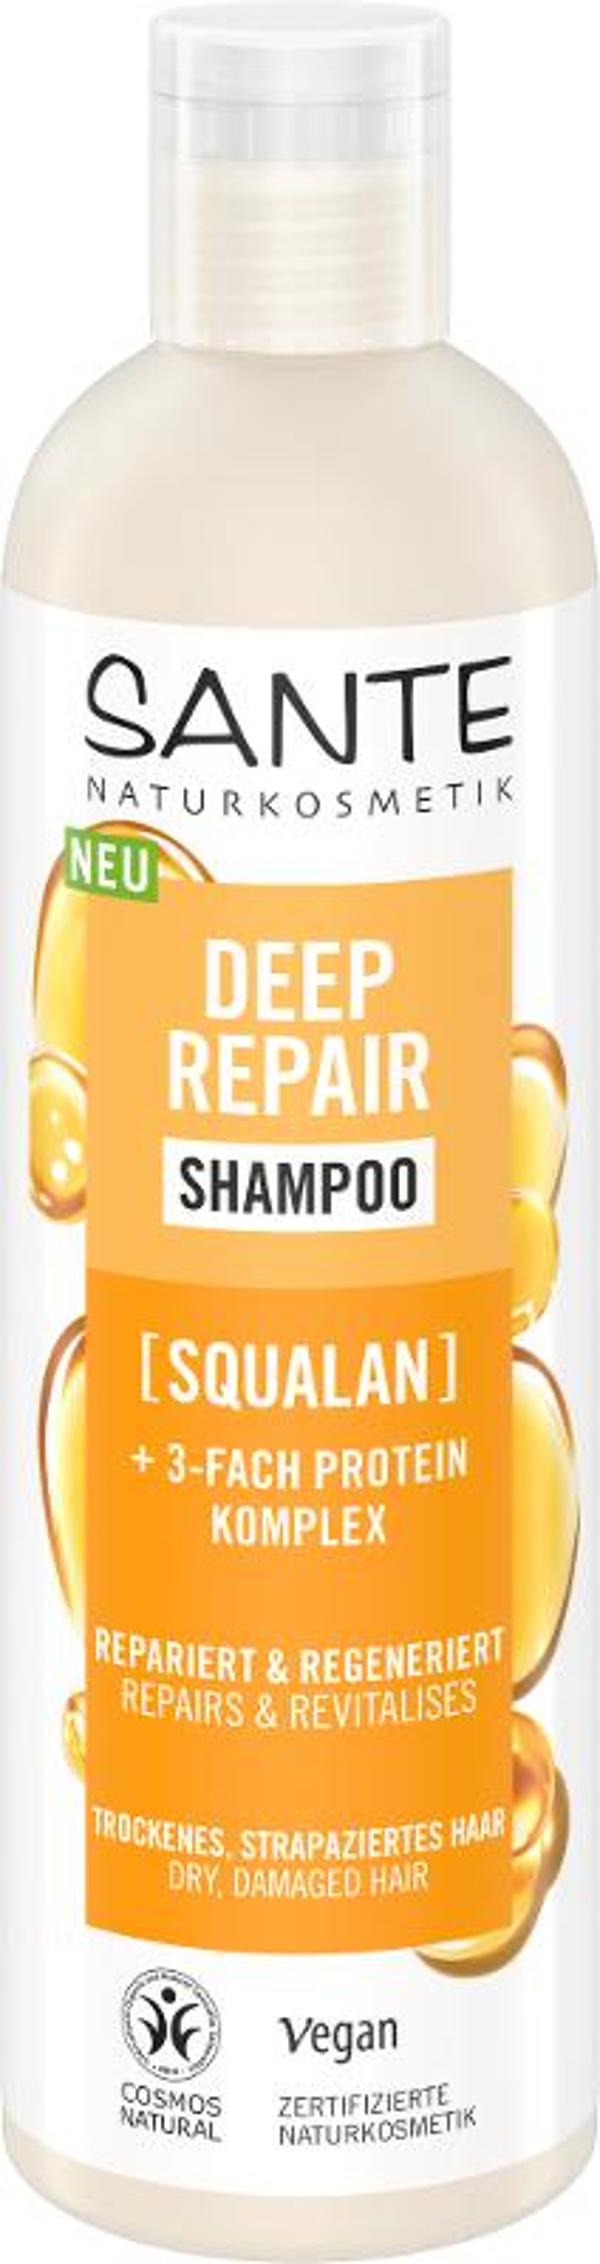 Produktfoto zu Deep Repair Shampoo Squalan 250ml Sante